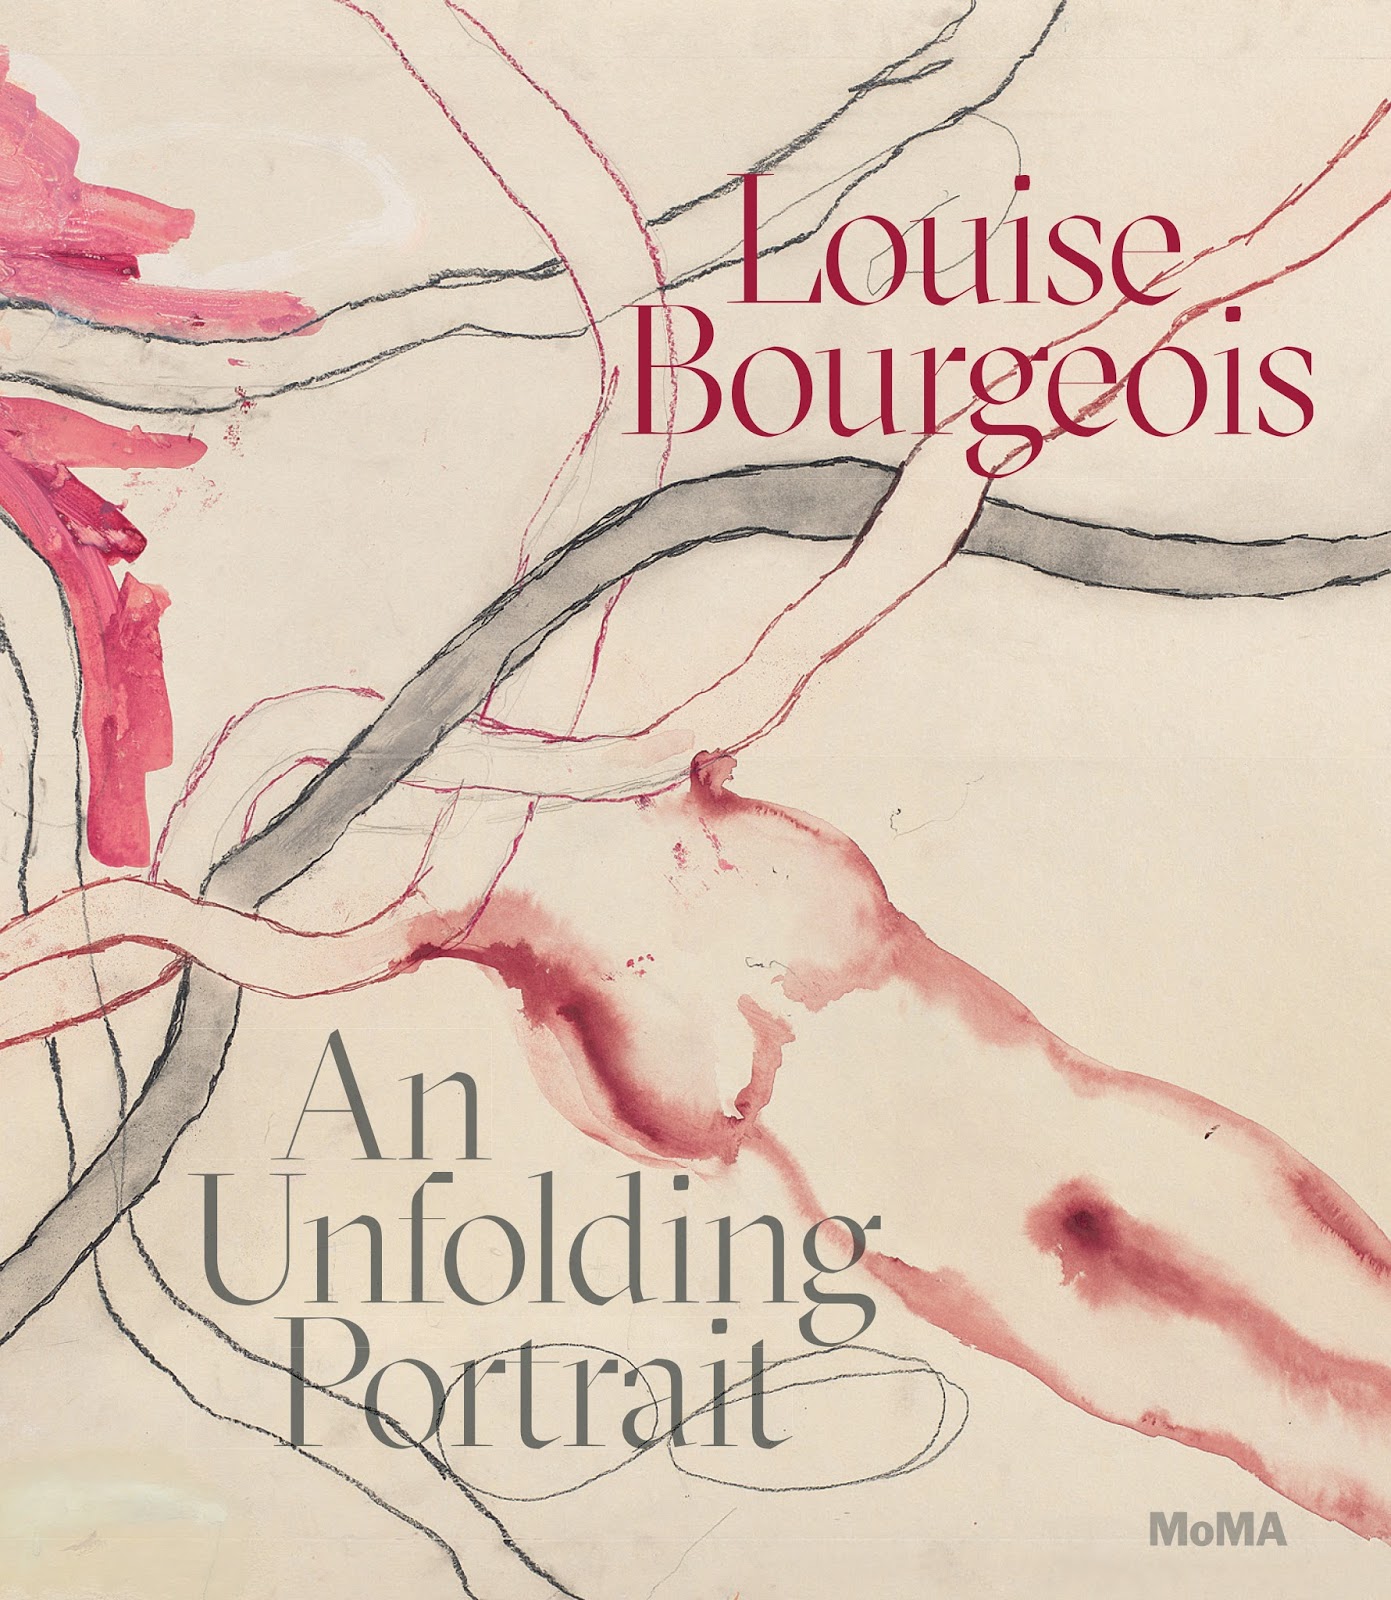 Louise Bourgeois, Self Portrait (1990)